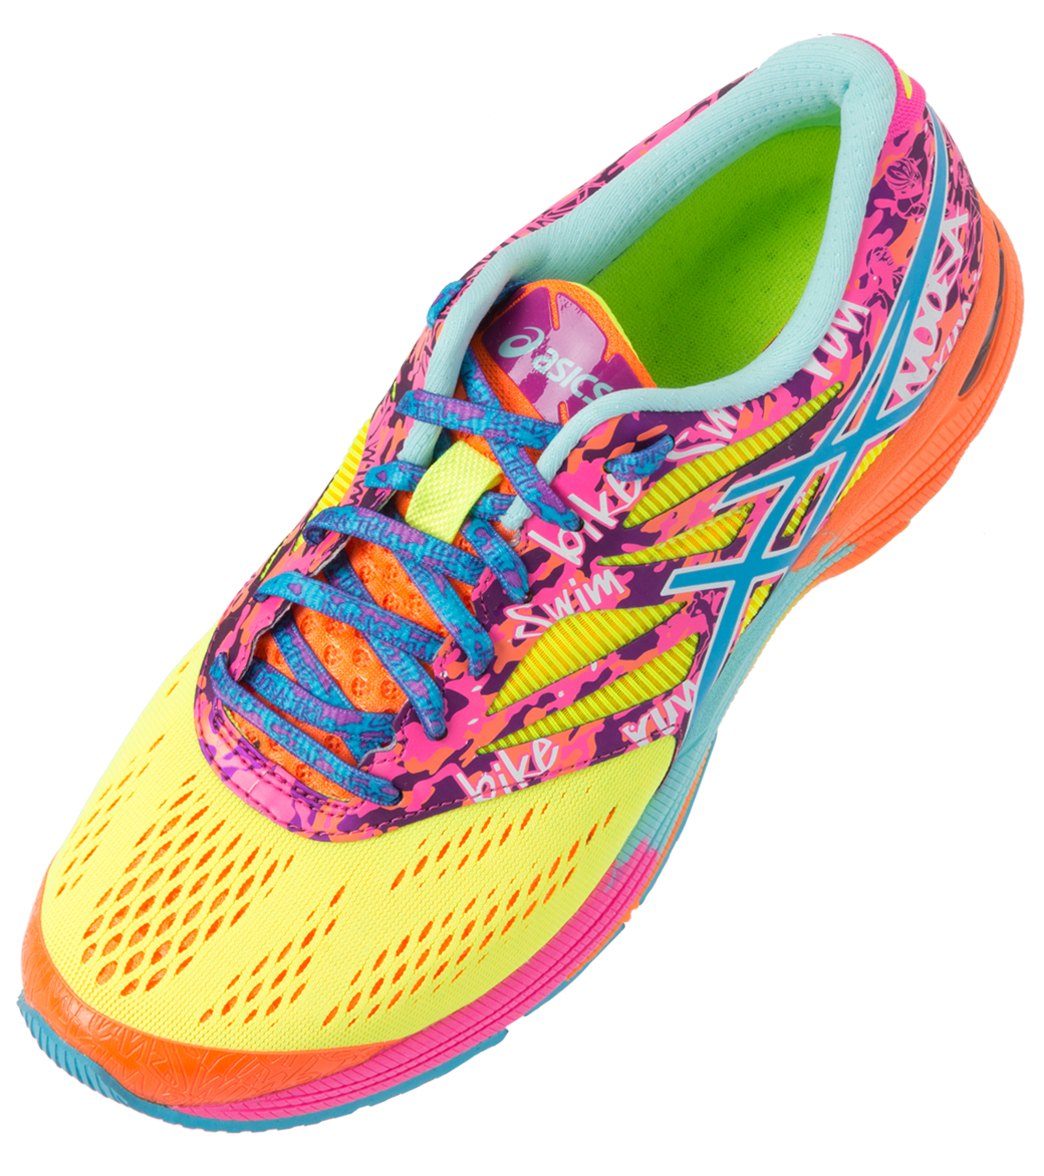 Asics Women's Gel-Noosa Tri 10 Running Shoes at SwimOutlet.com - Free ...